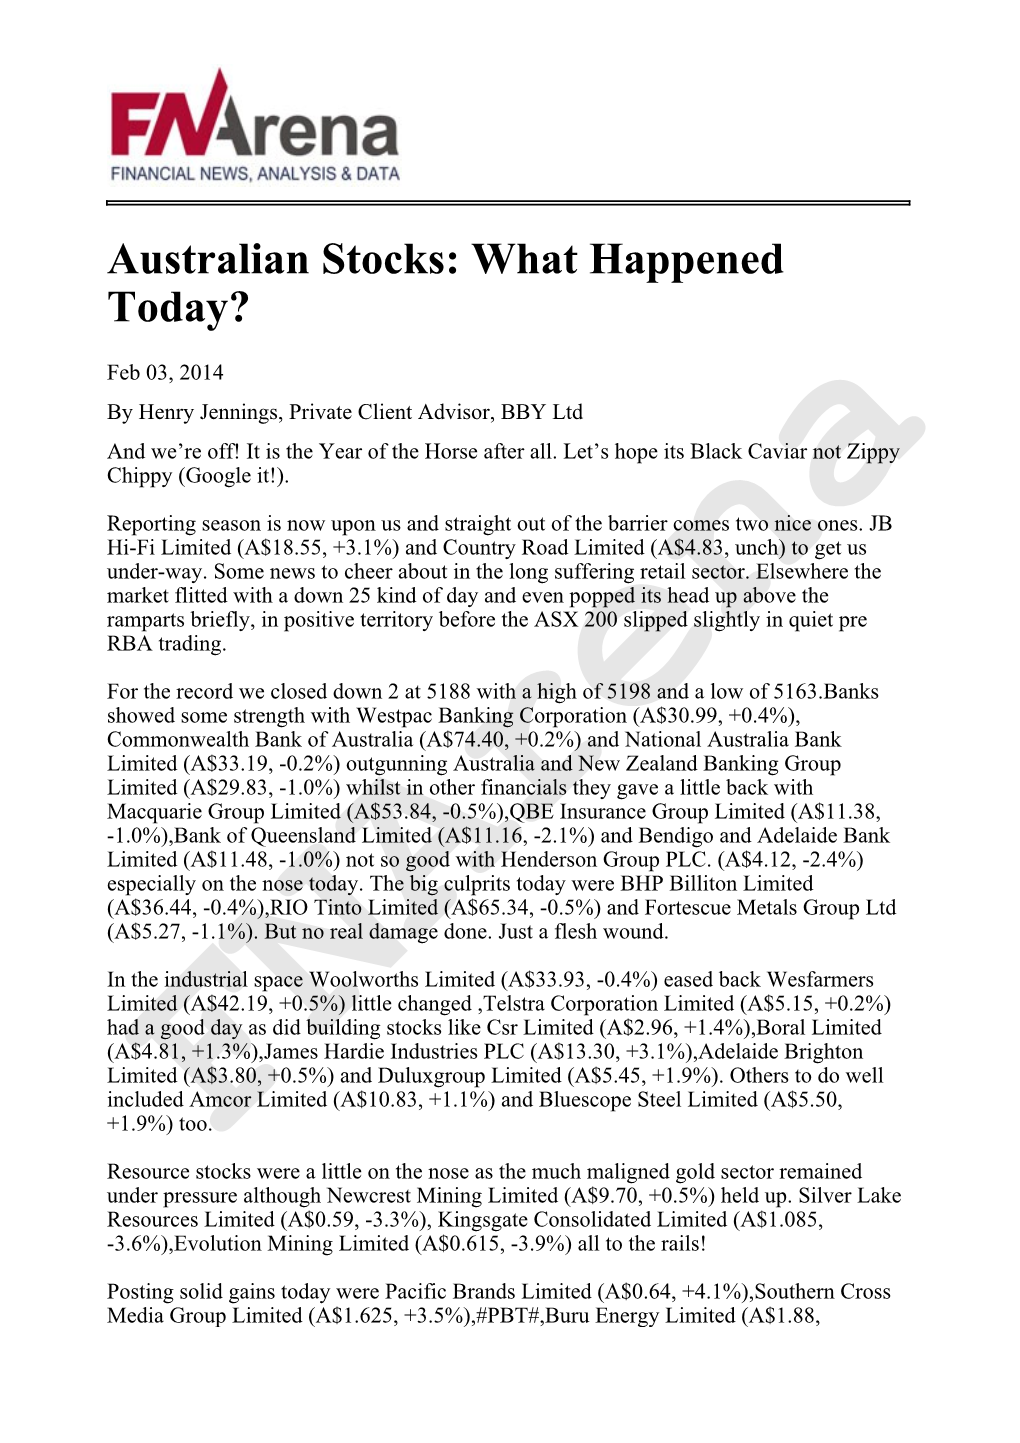 Australian Stocks: What Happened Today?